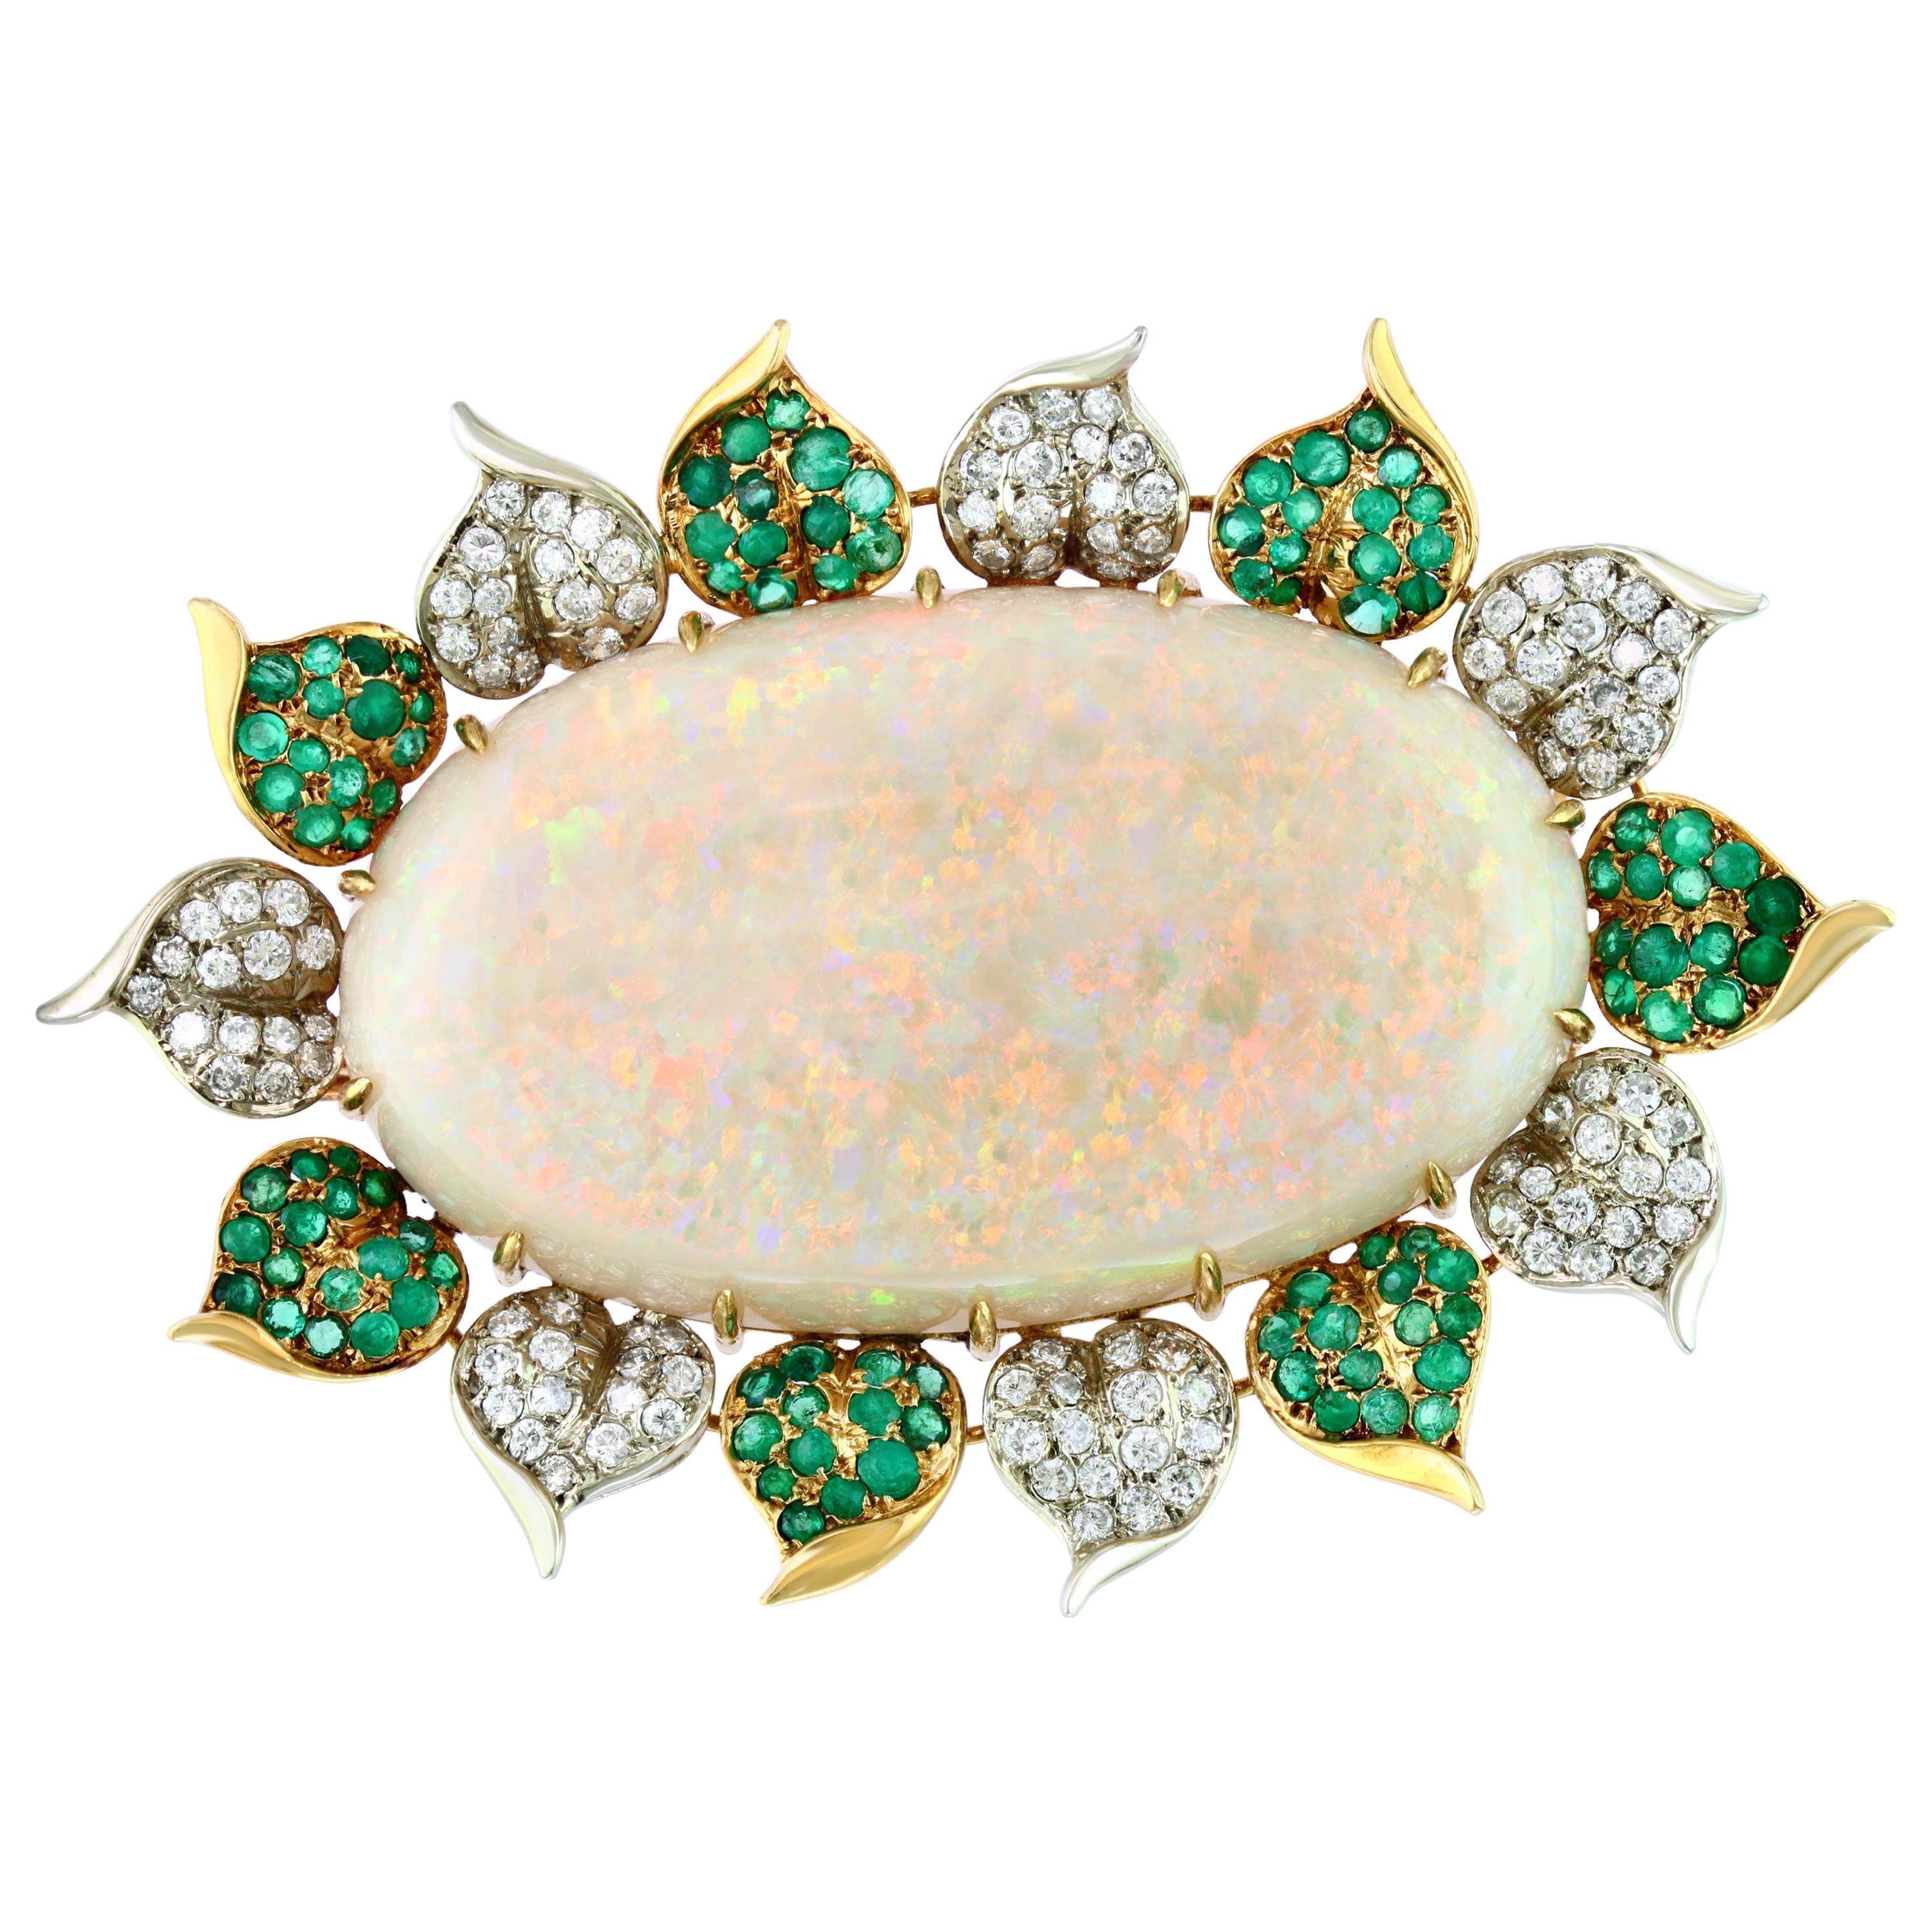 107 Karat ovaler australischer Opal, Diamant und Smaragd-Anhänger /Pin/Brosche 18K Gold